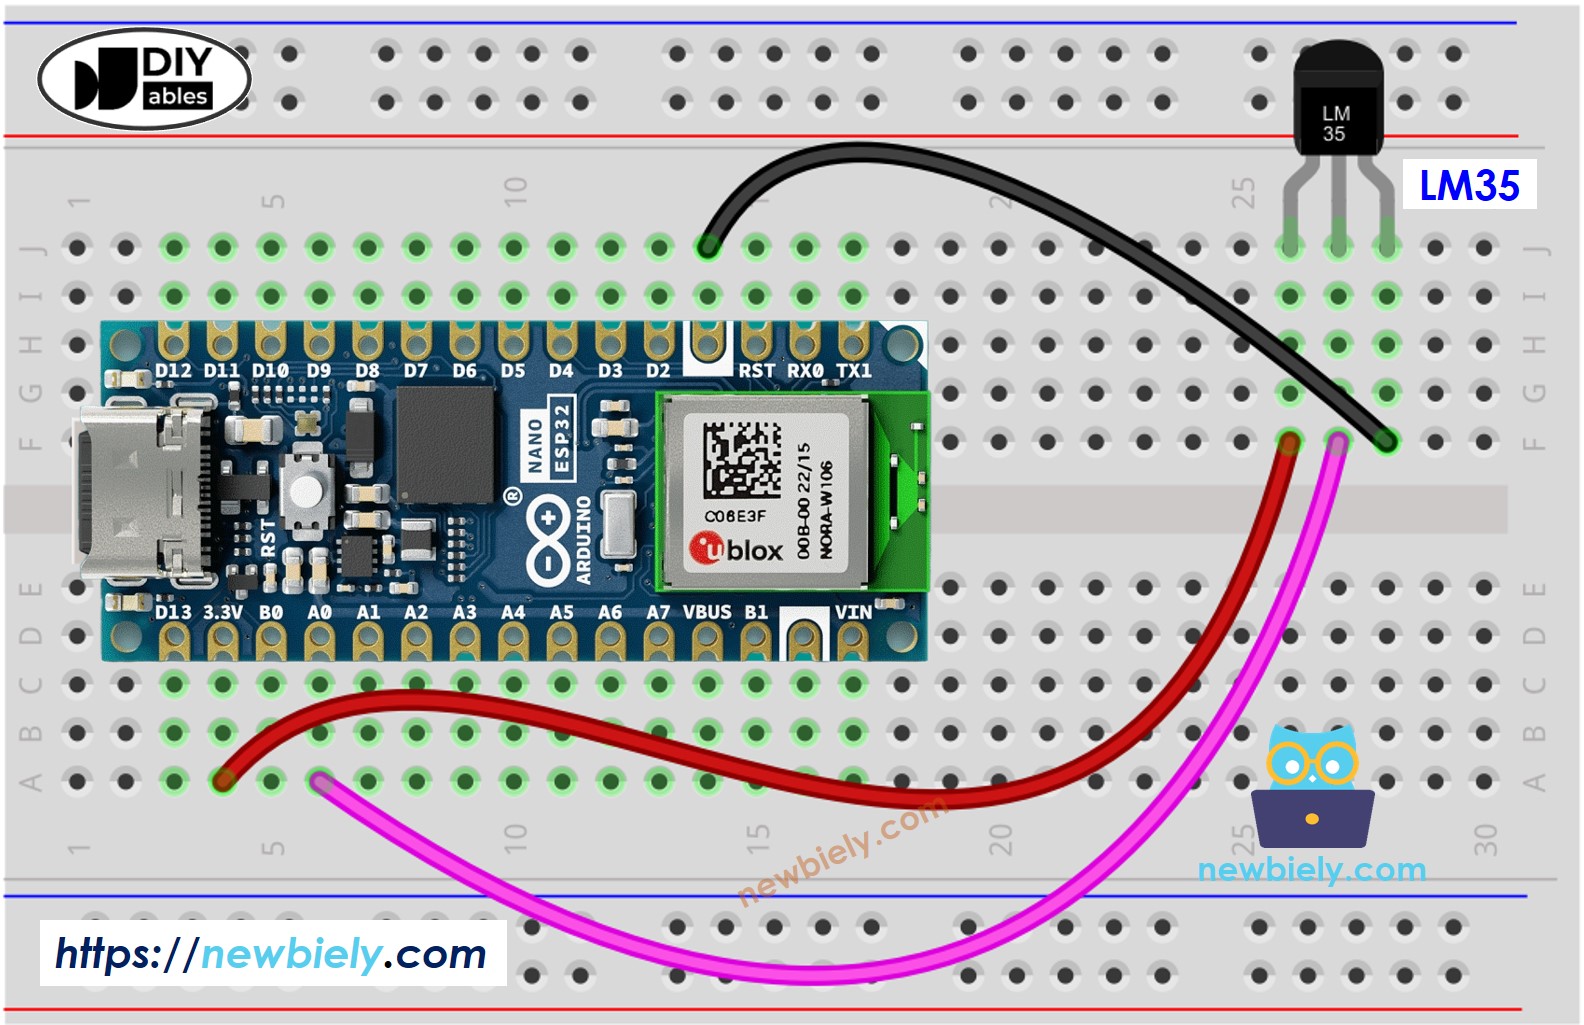 The wiring diagram between Arduino Nano ESP32 and LM35 temperature sensor